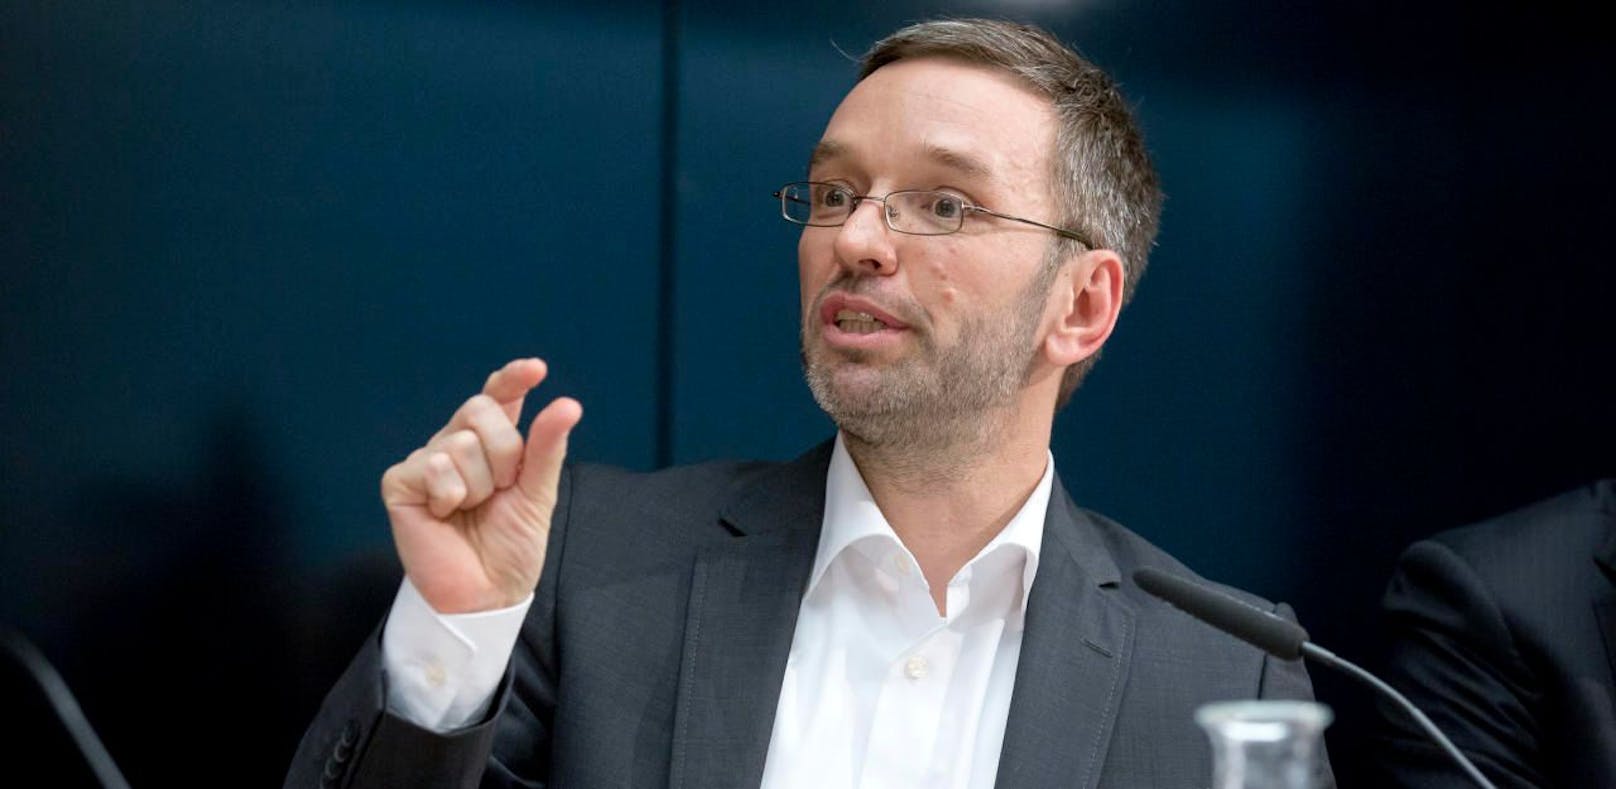 FPÖ-Generalsekretär Herbert Kickl ist unter den Spitzenverdienern im Parlament.